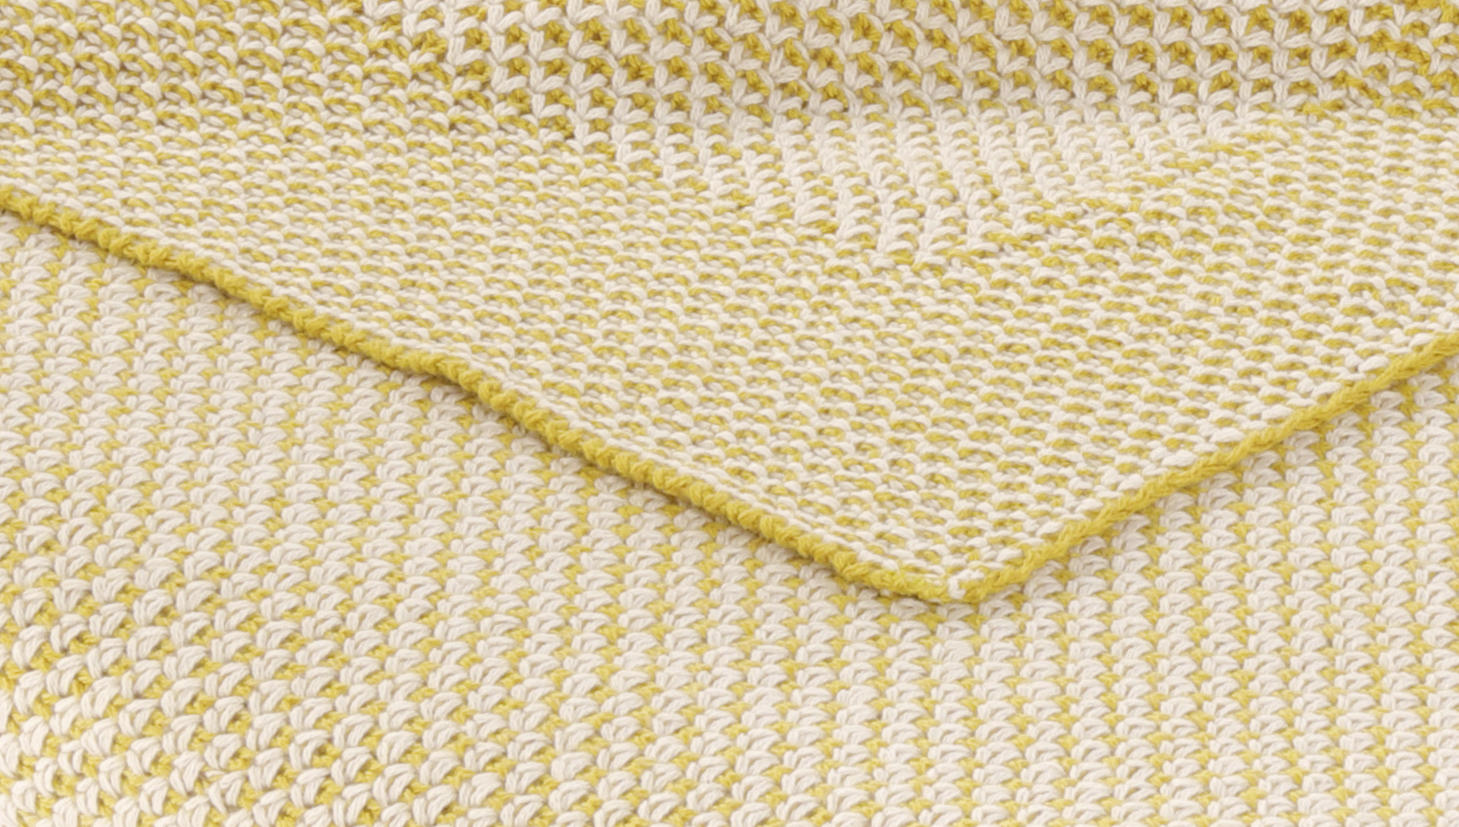 PLAID Light-Knit 130/170 cm  - Beige/Goldfarben, Design, Textil (130/170cm) - Joop!